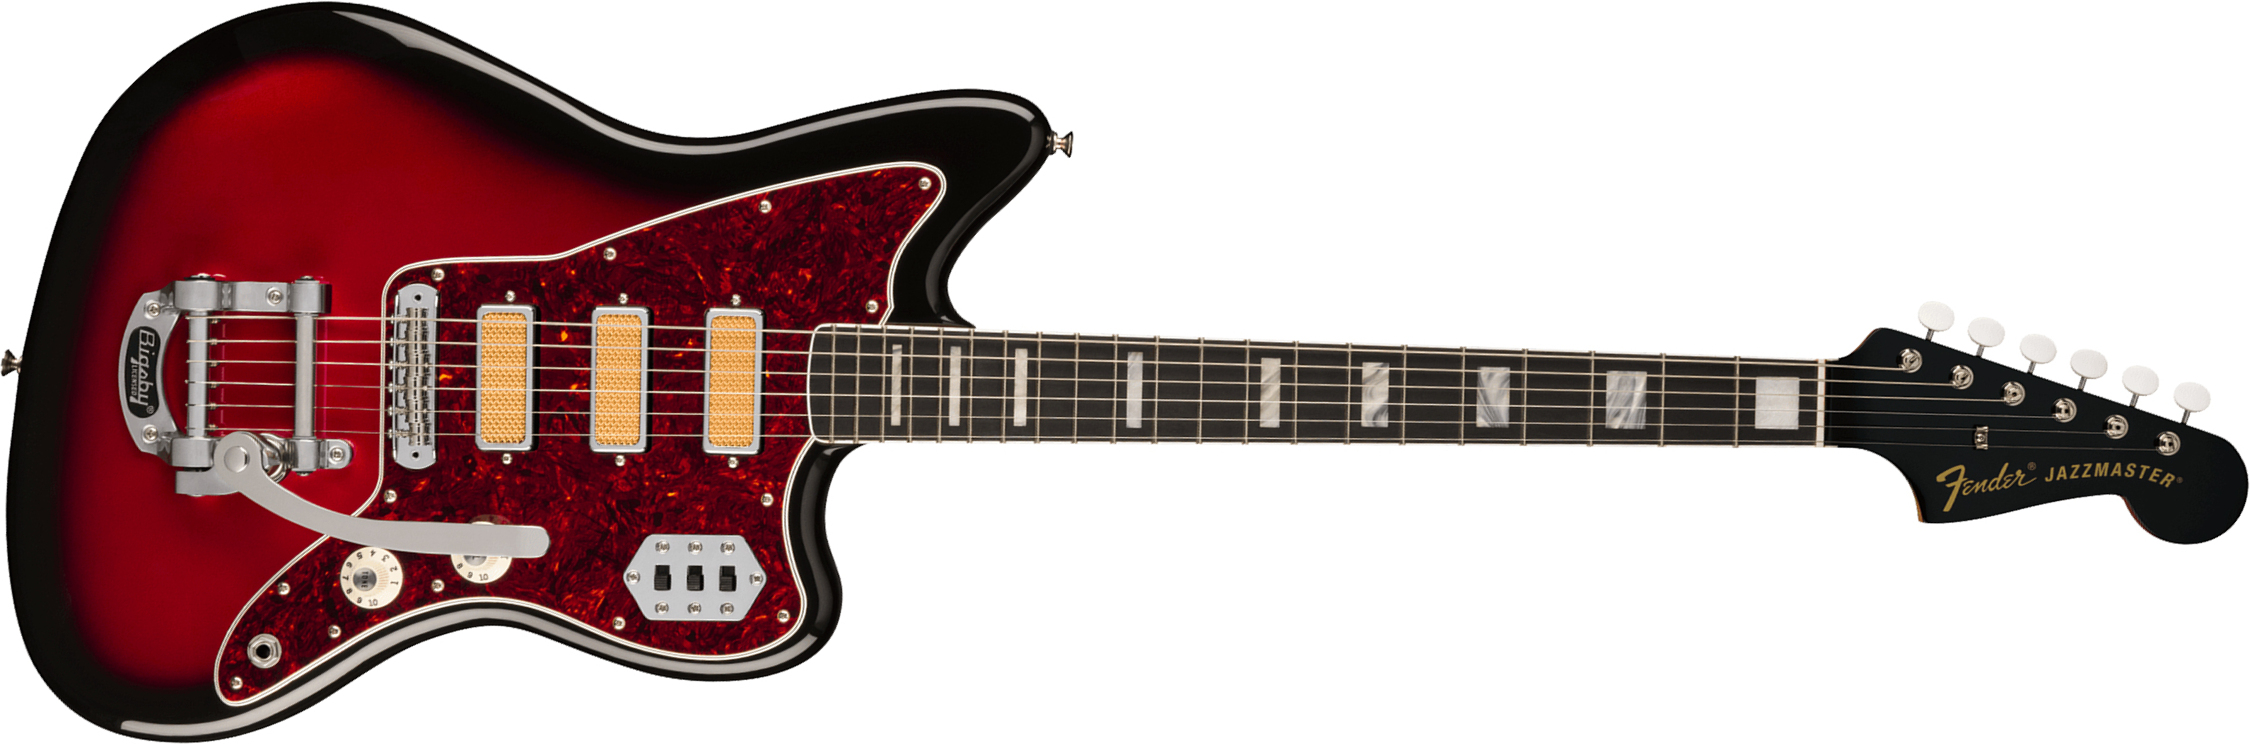 Fender Jazzmaster Gold Foil Ltd Mex 3mh Trem Bigsby Eb - Candy Apple Burst - Retro-rock elektrische gitaar - Main picture